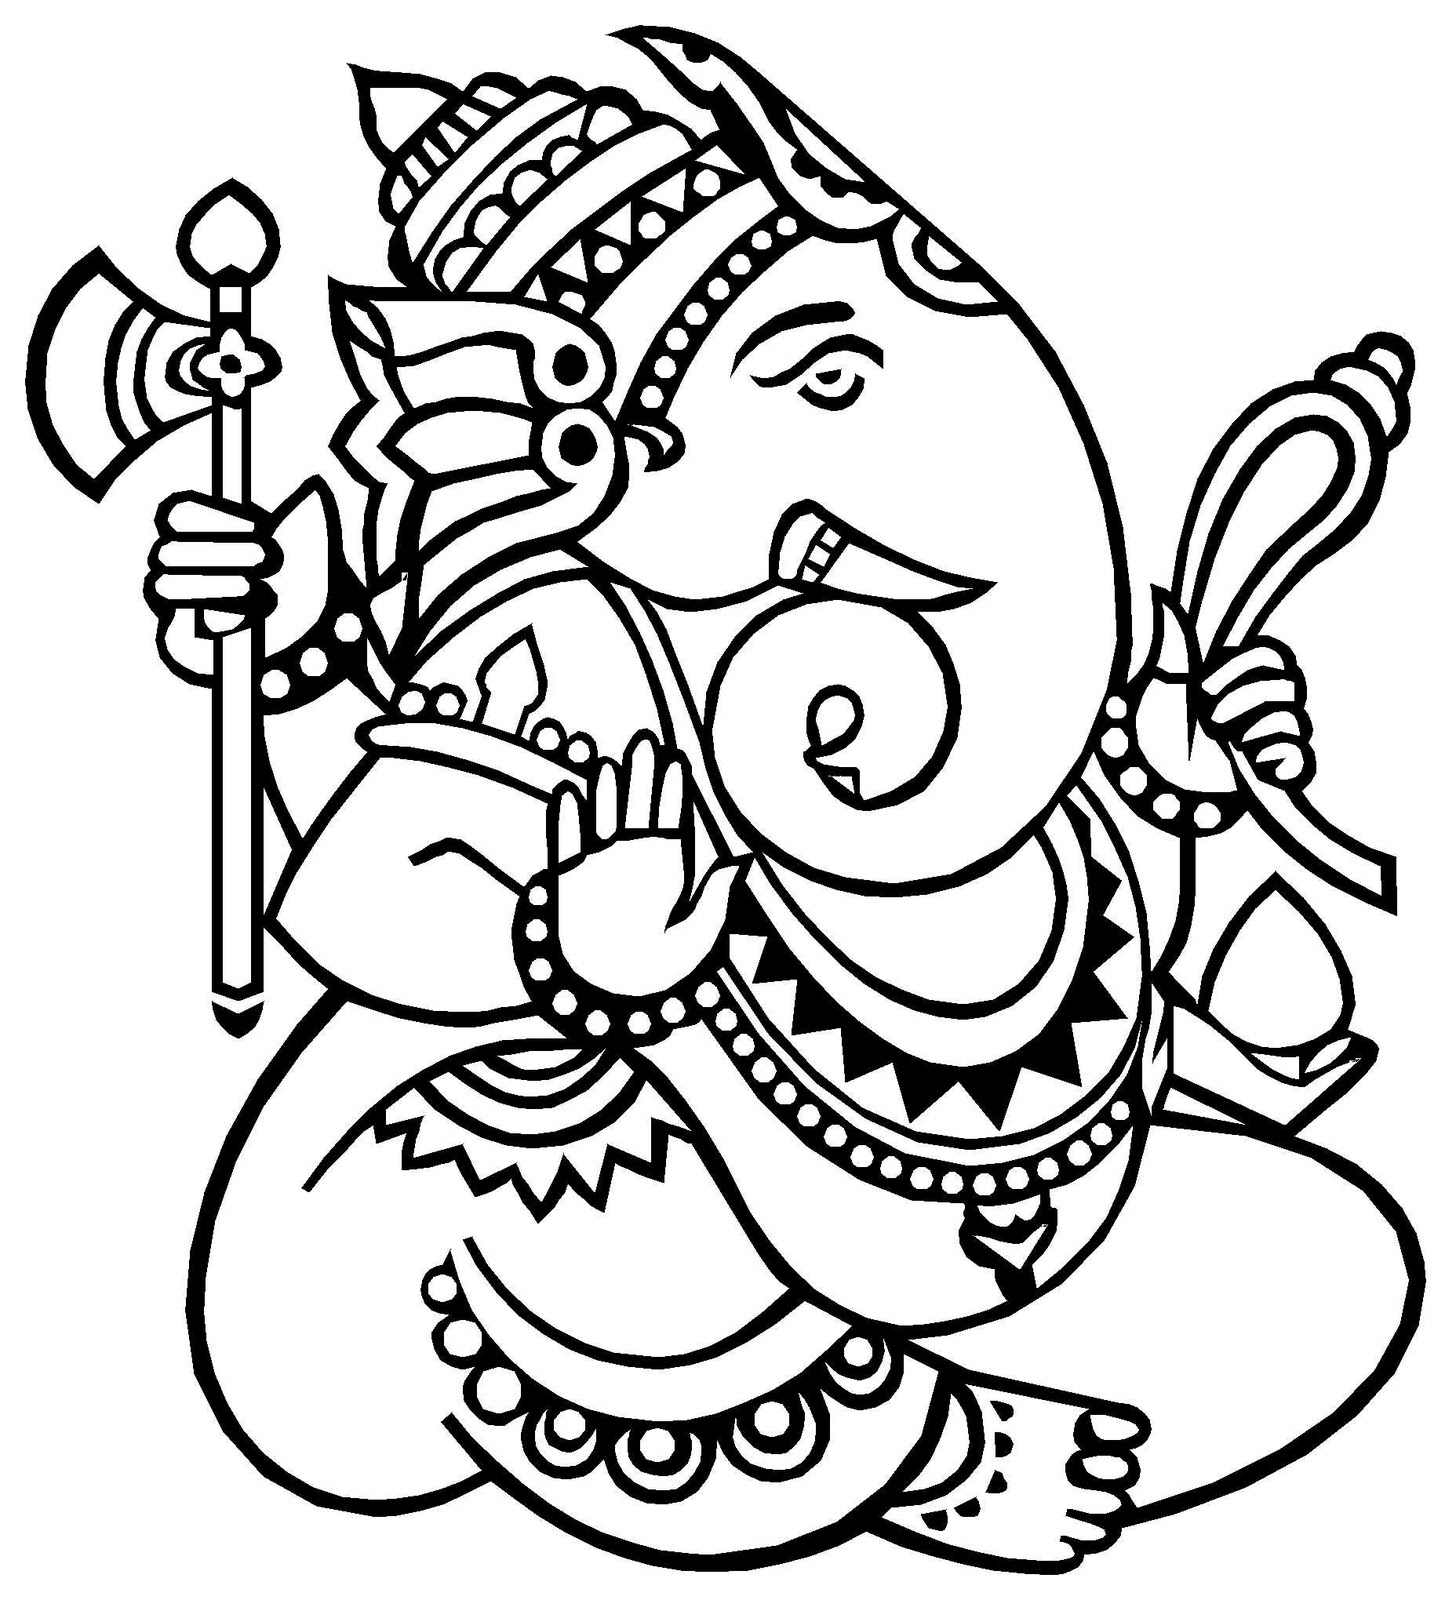 Ganesh Drawings - ClipArt Best